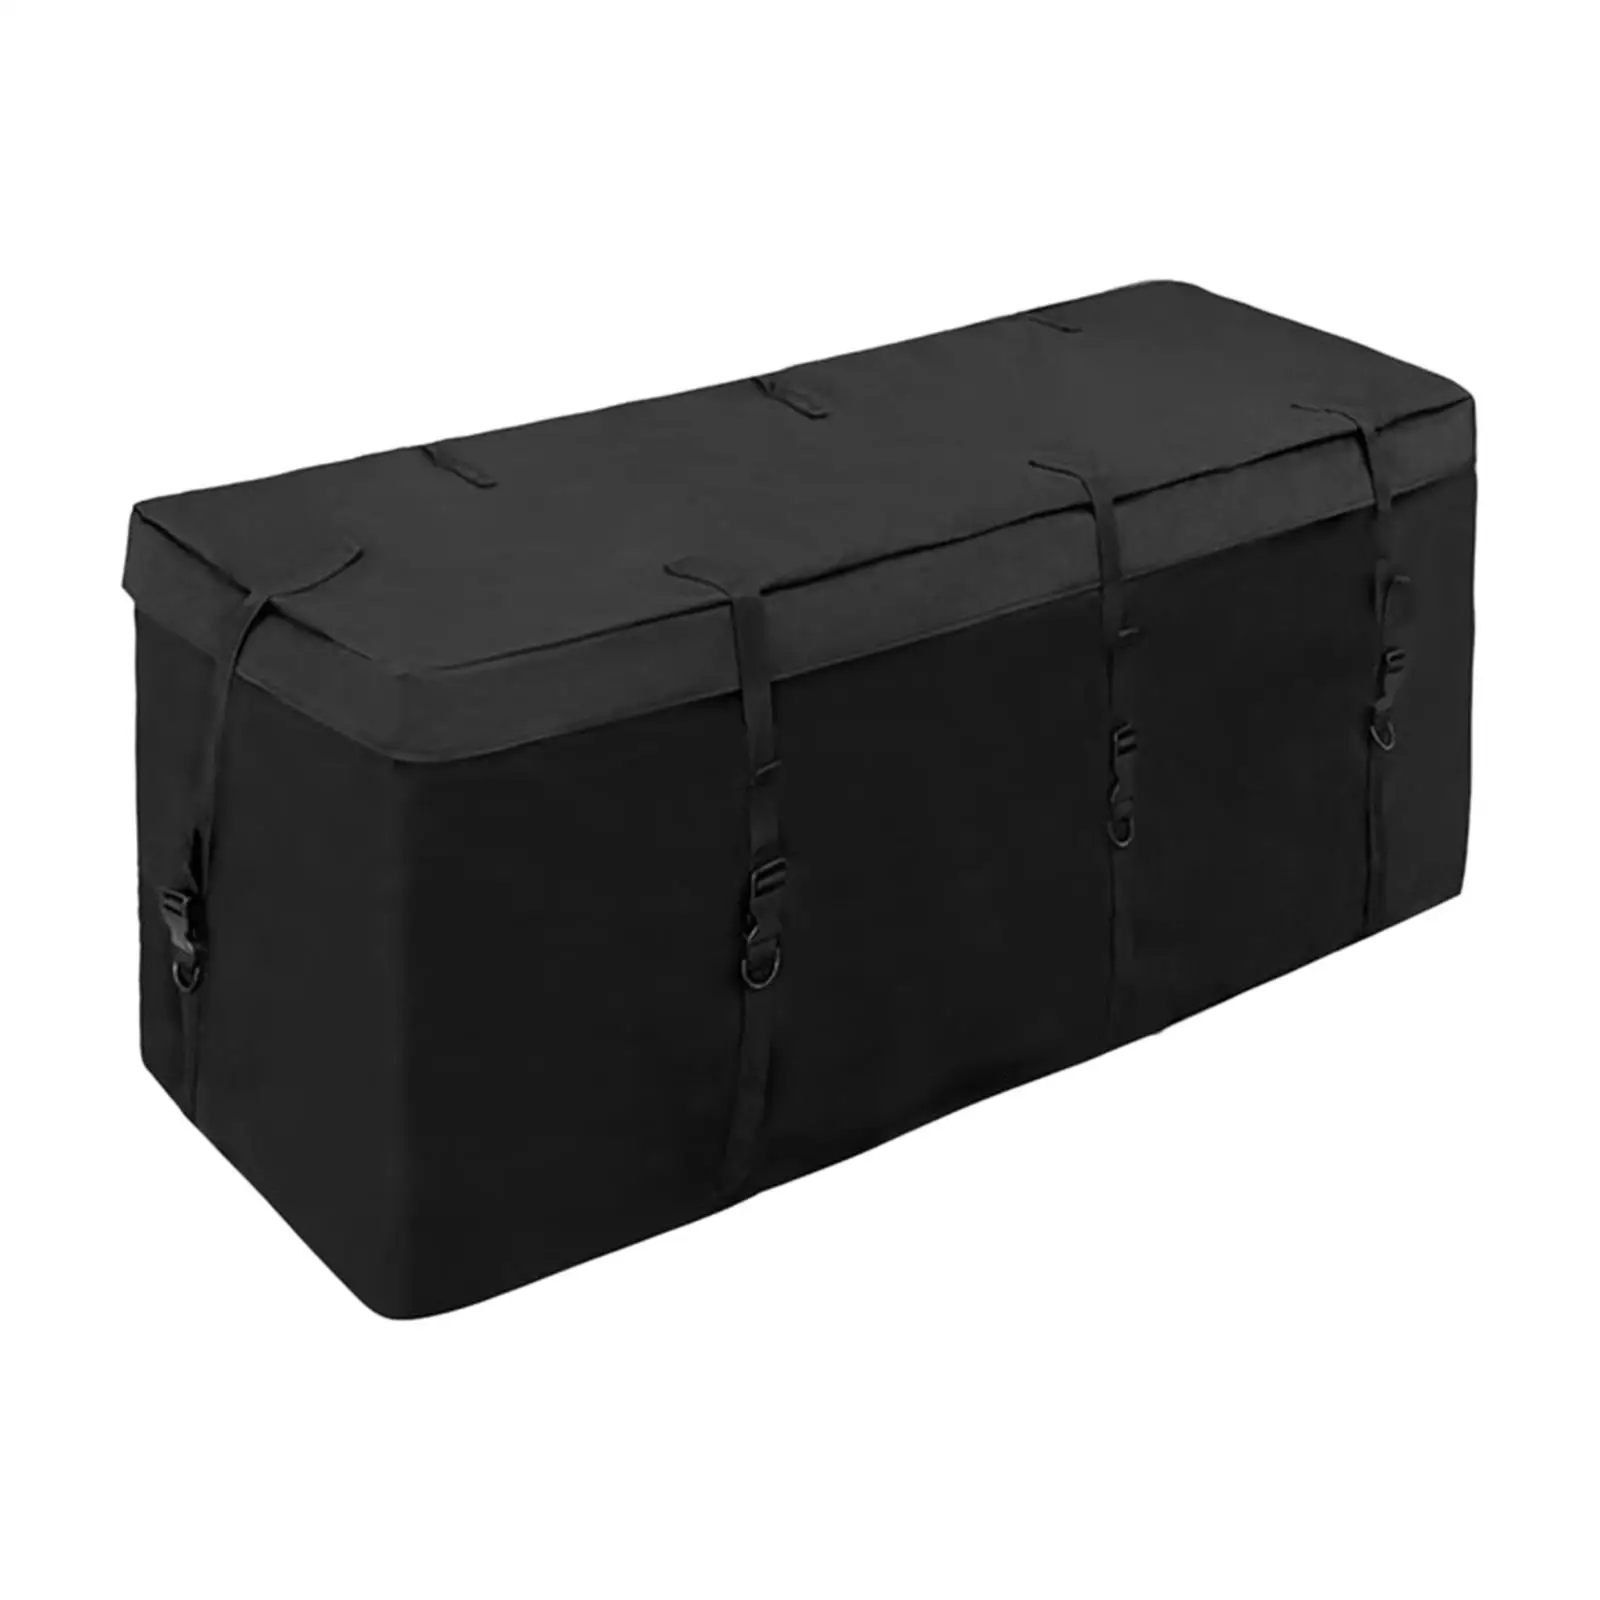 Hitch Cargo Carrier Bag Reinforced Straps Black Luggage Storage Cargo Traveling Bag for Vans All Vehicle Trailer Travel SUV